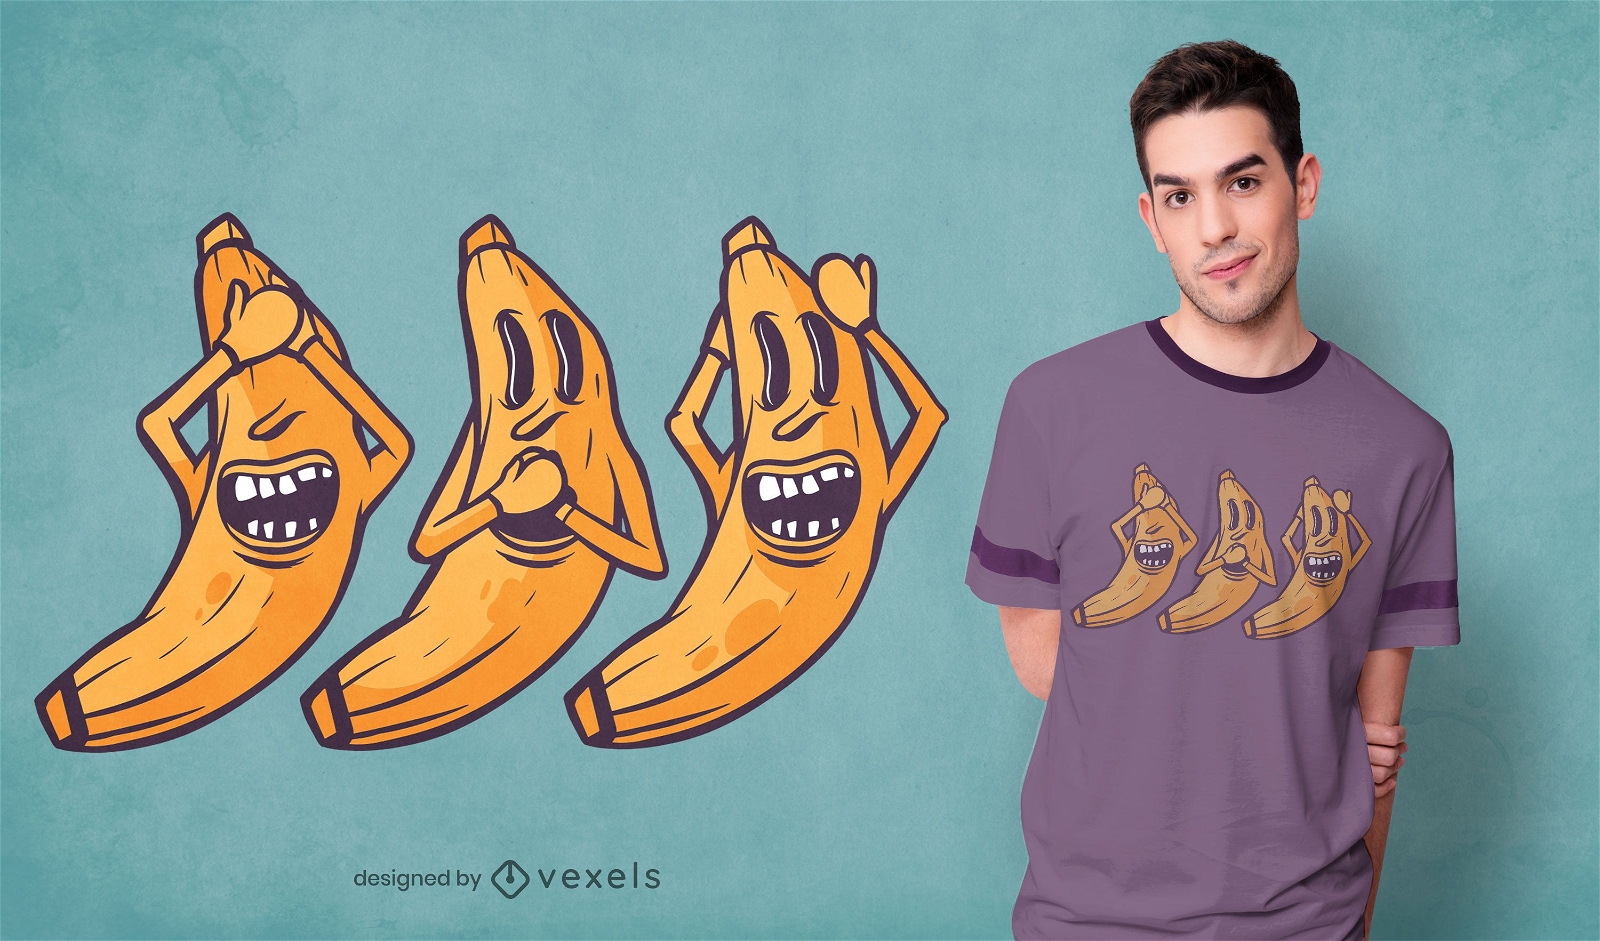 Dise?o de camiseta de bananas locas